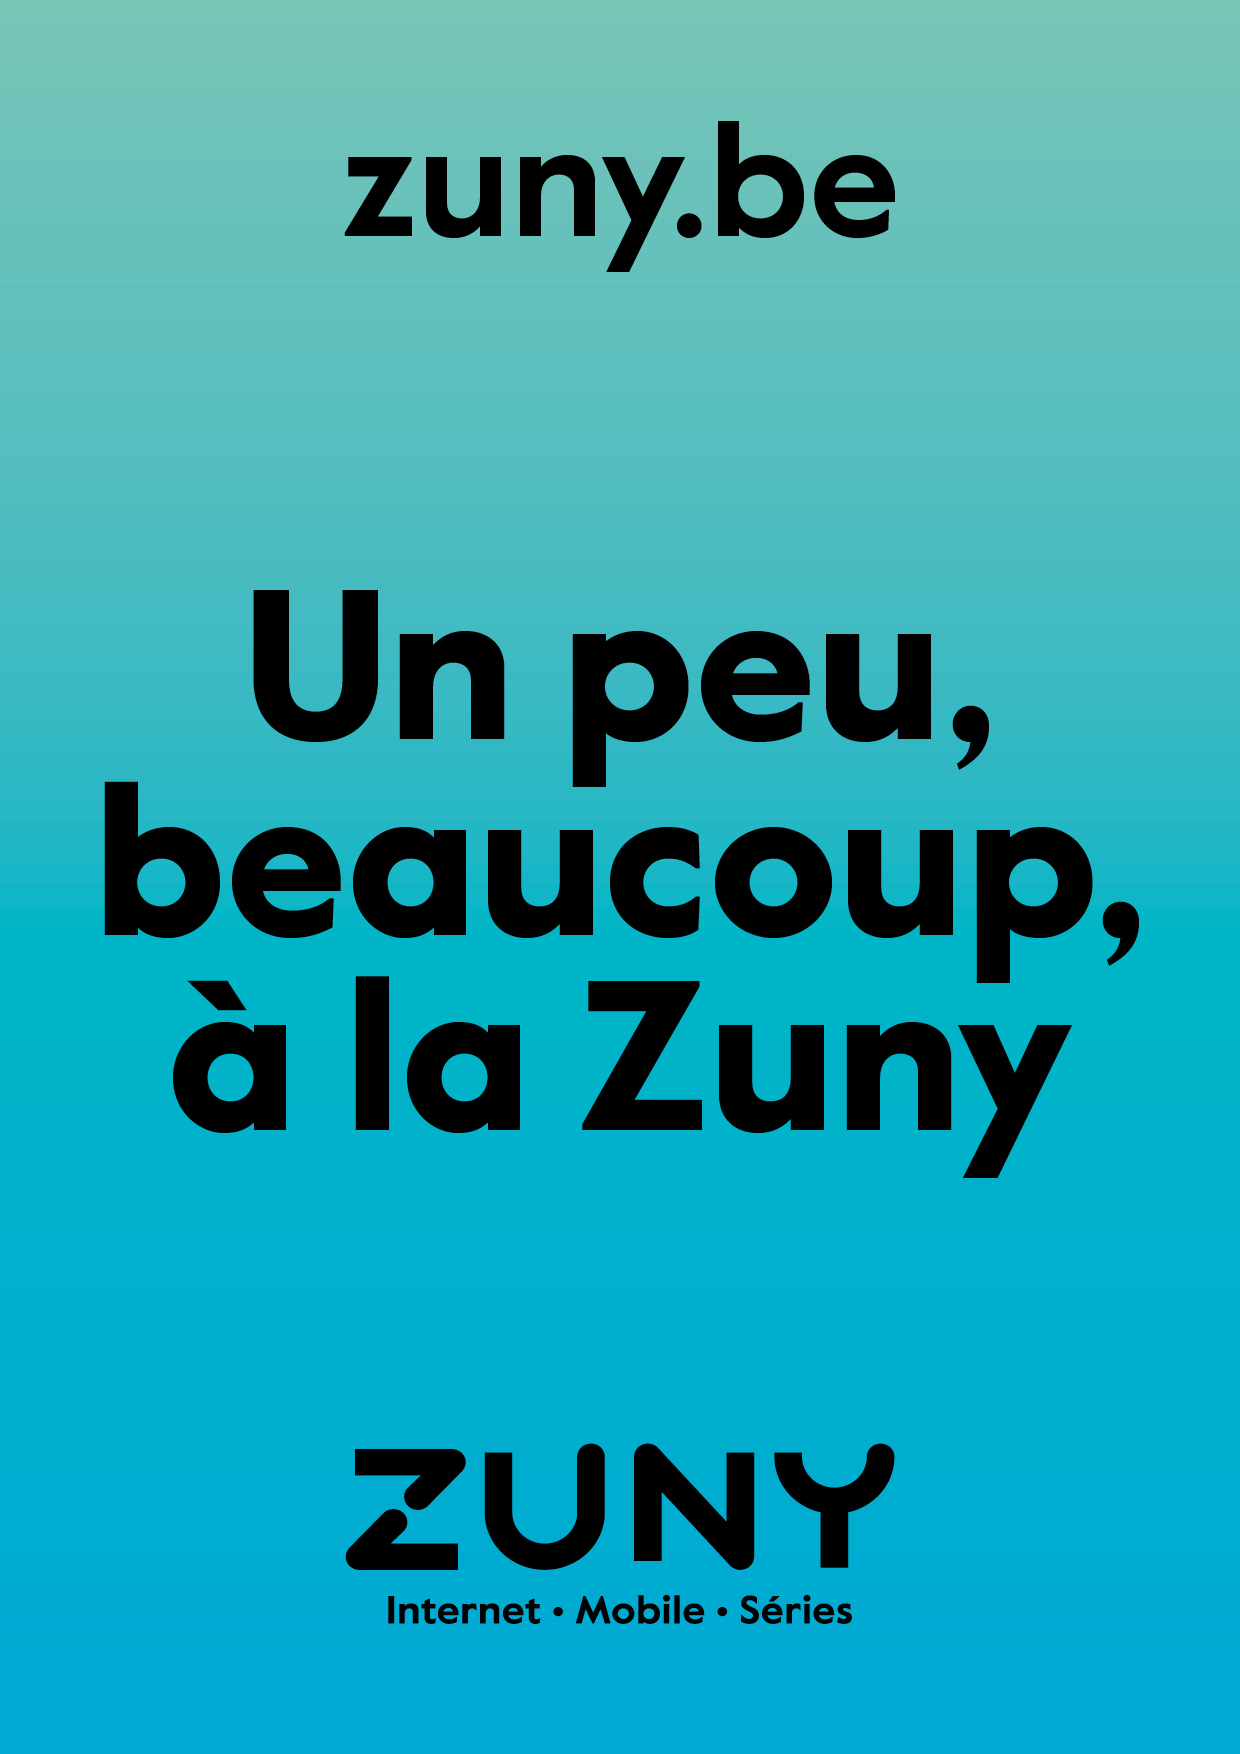 Zuny Un peu Beaucoup